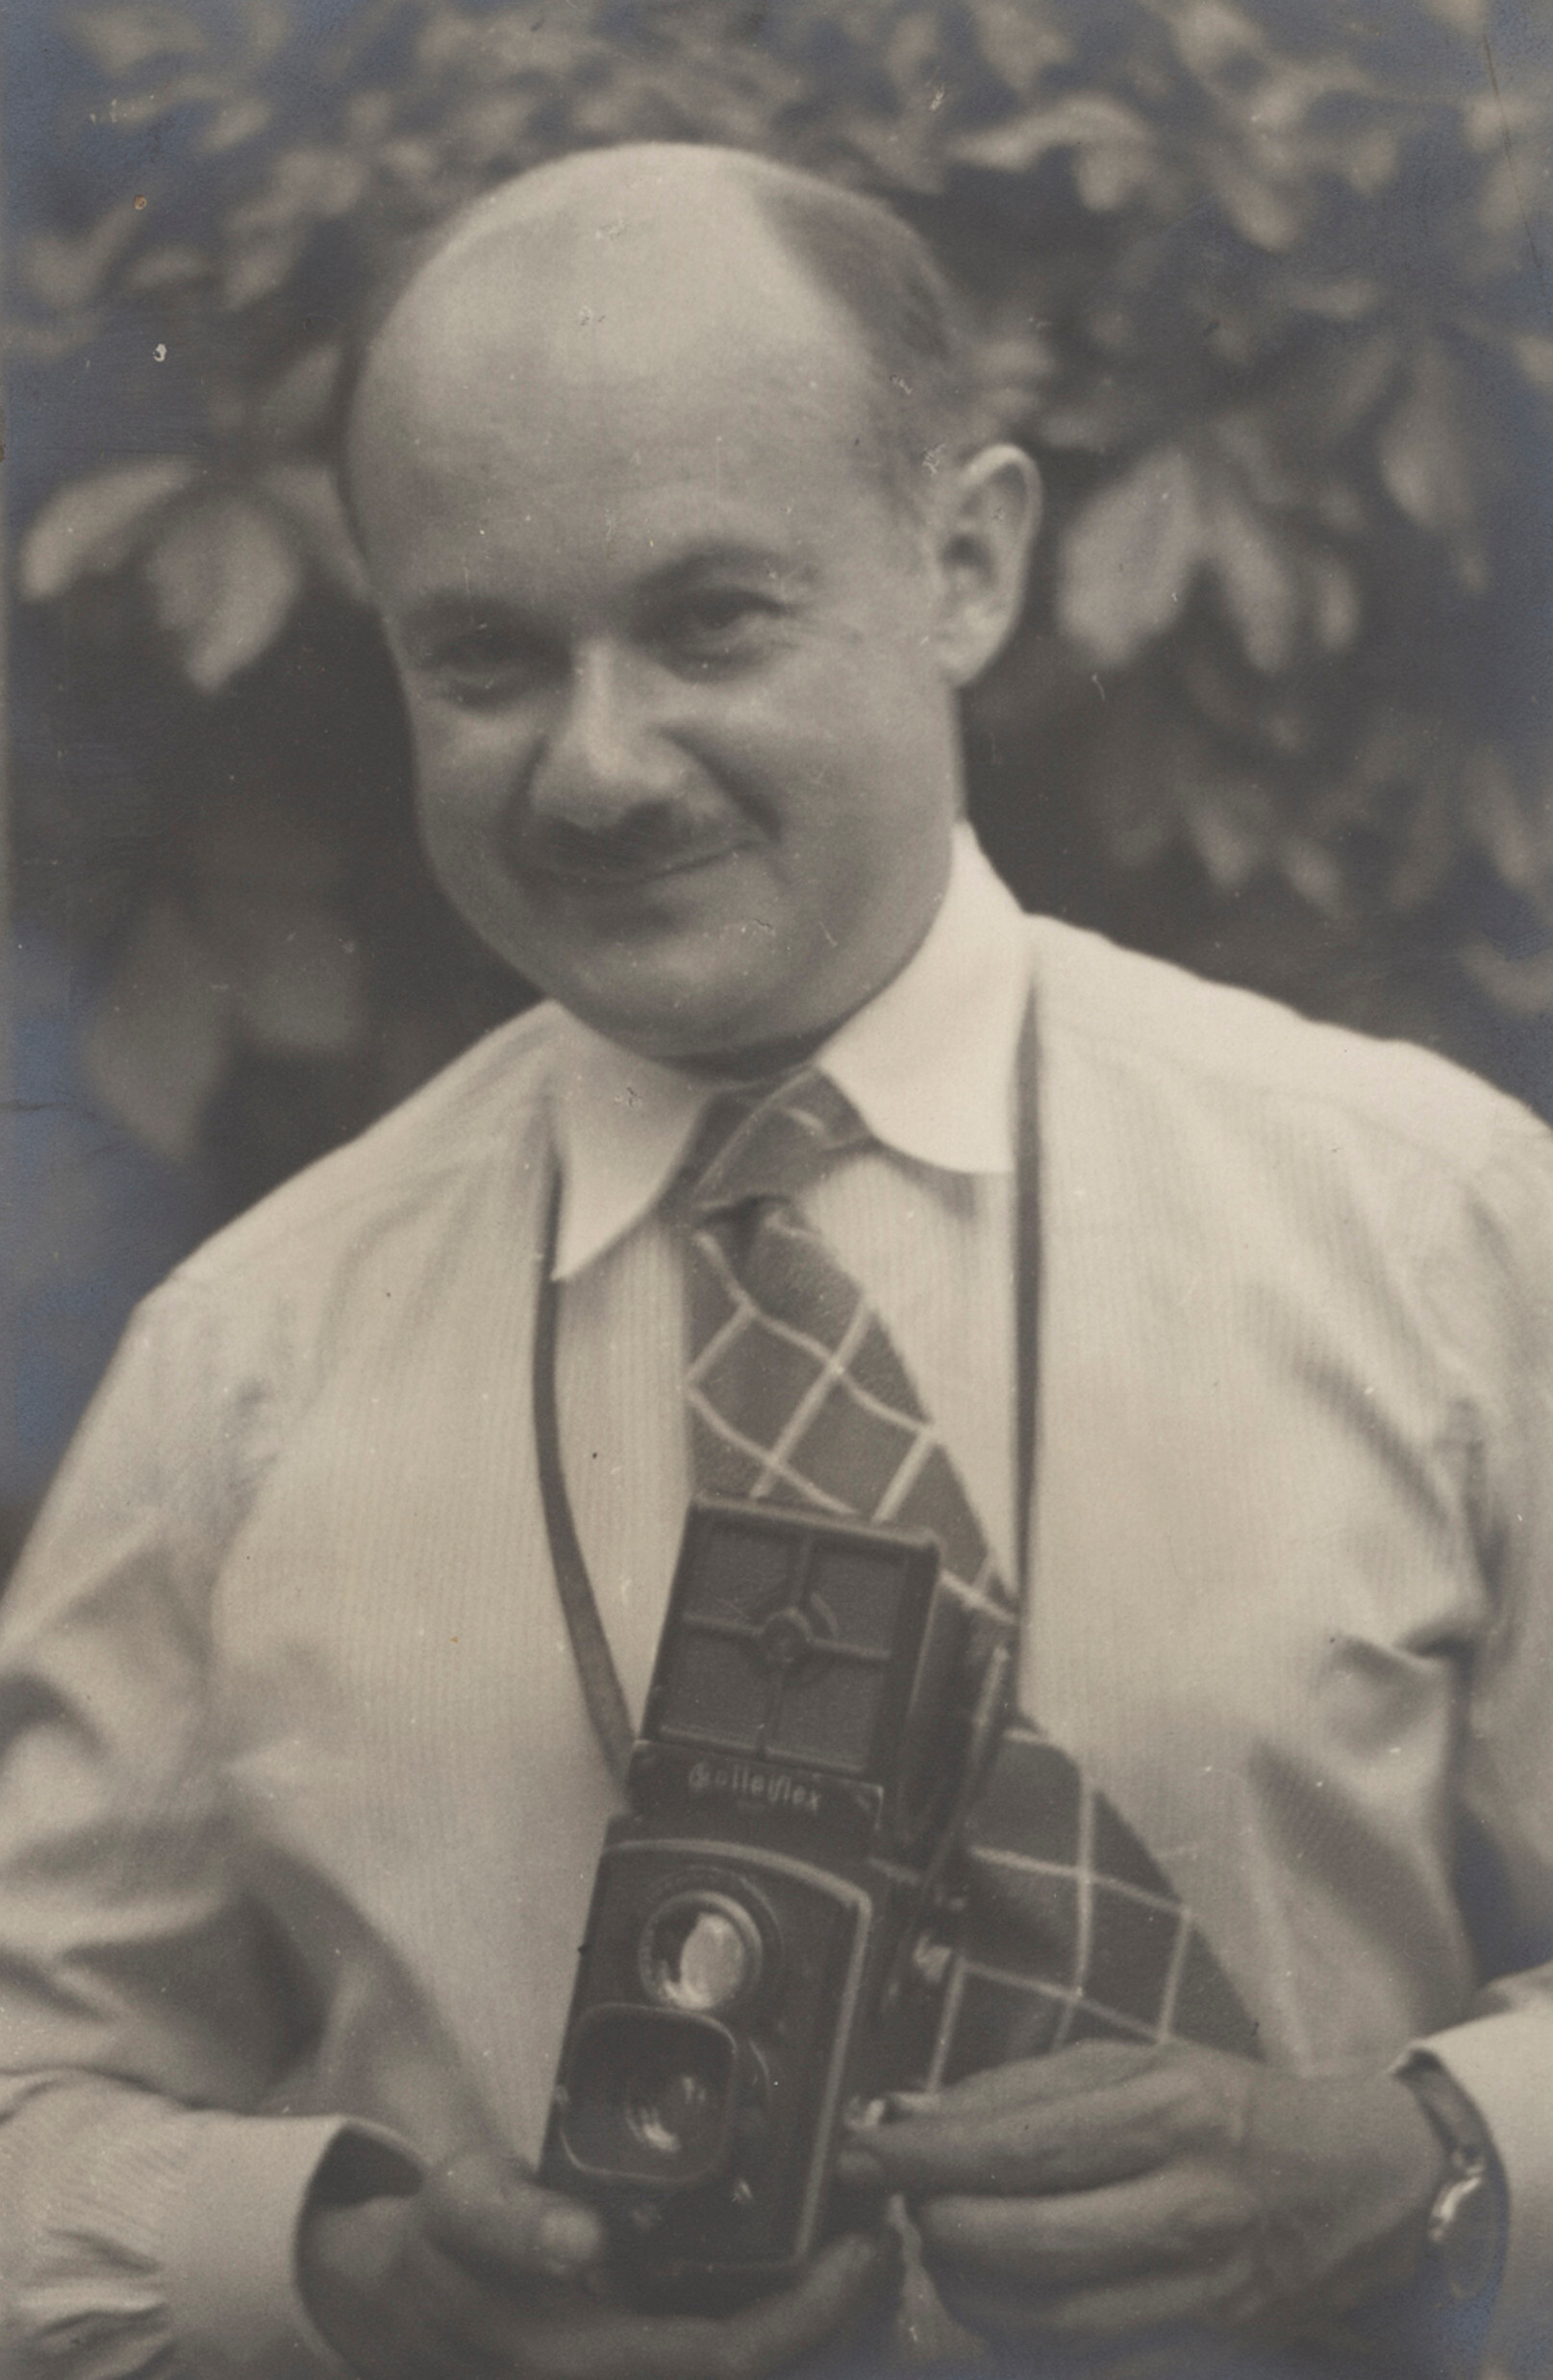 Роман Вишняк со своей камерой Rolleiflex, вероятно, Германия, ок. 1935–38 гг. Фотограф Роман Вишняк